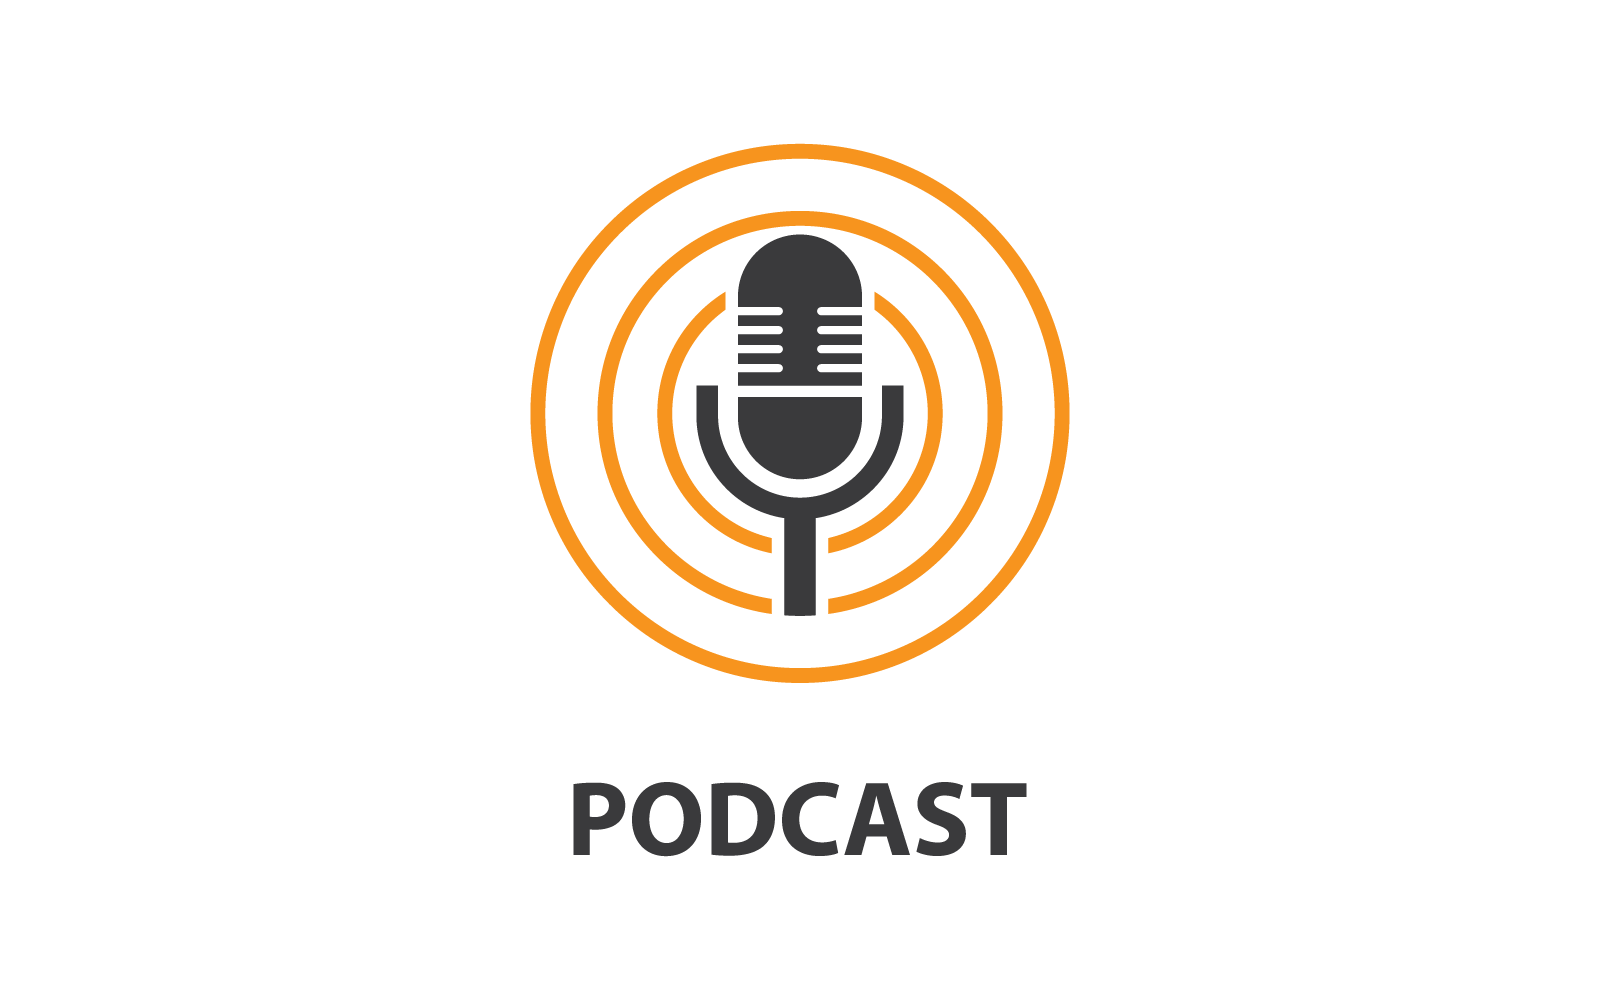 Podcast Logo Illustration Vector Flat Design eps 10